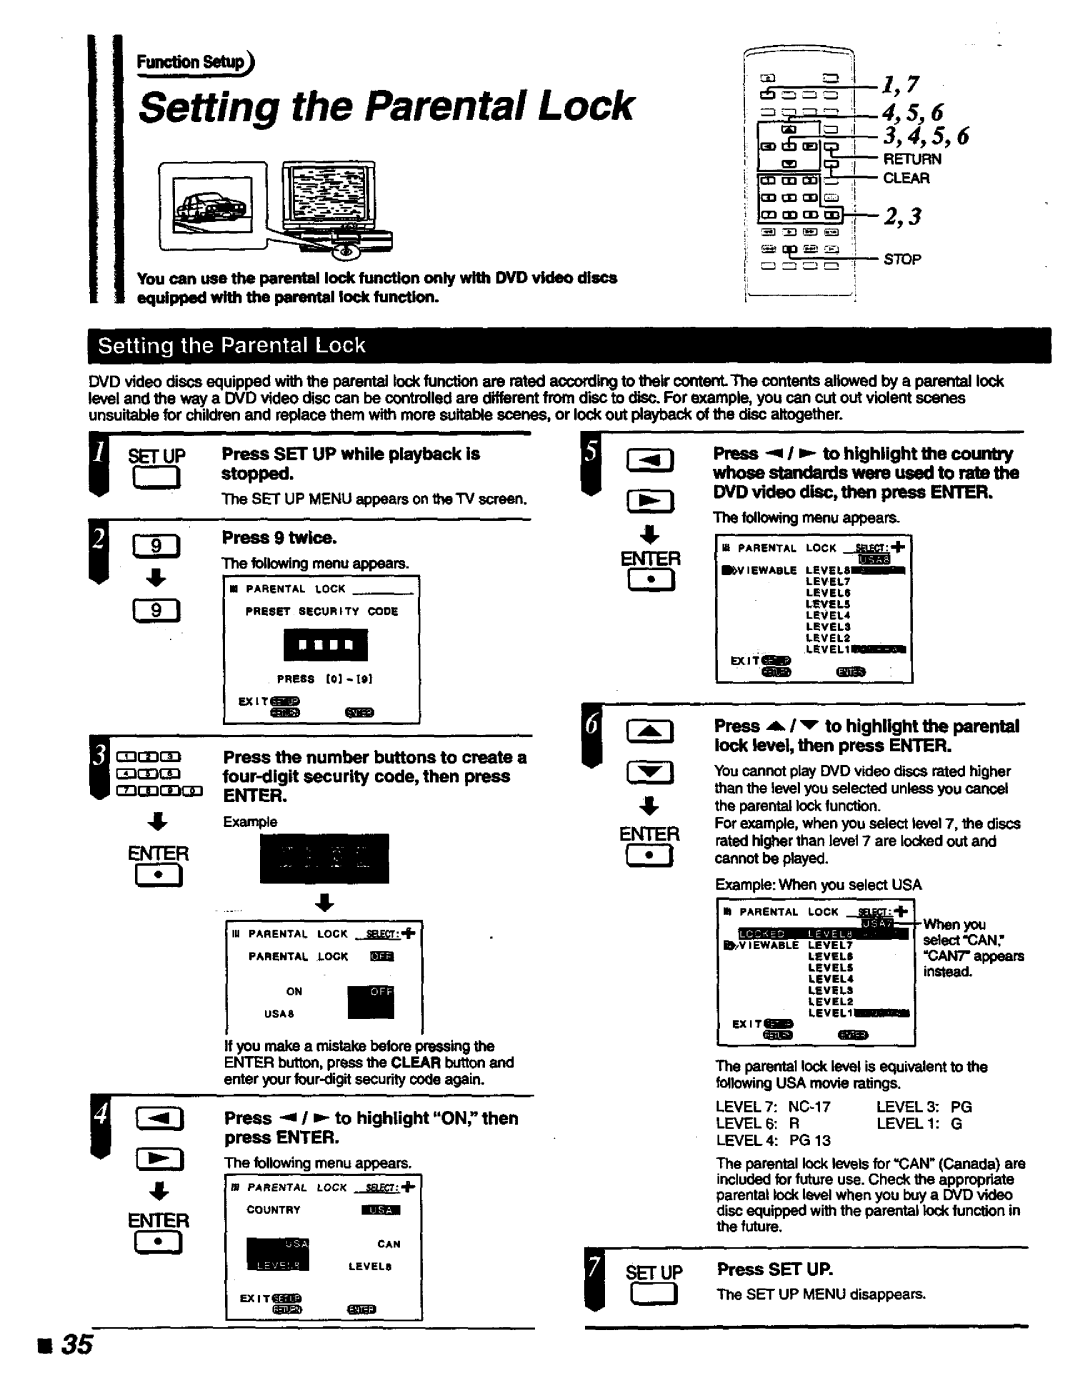 Magnavox DVD400AT manual Setting the Parental Lock, ENteR, 4,s,6, Enter, ii 1,7 